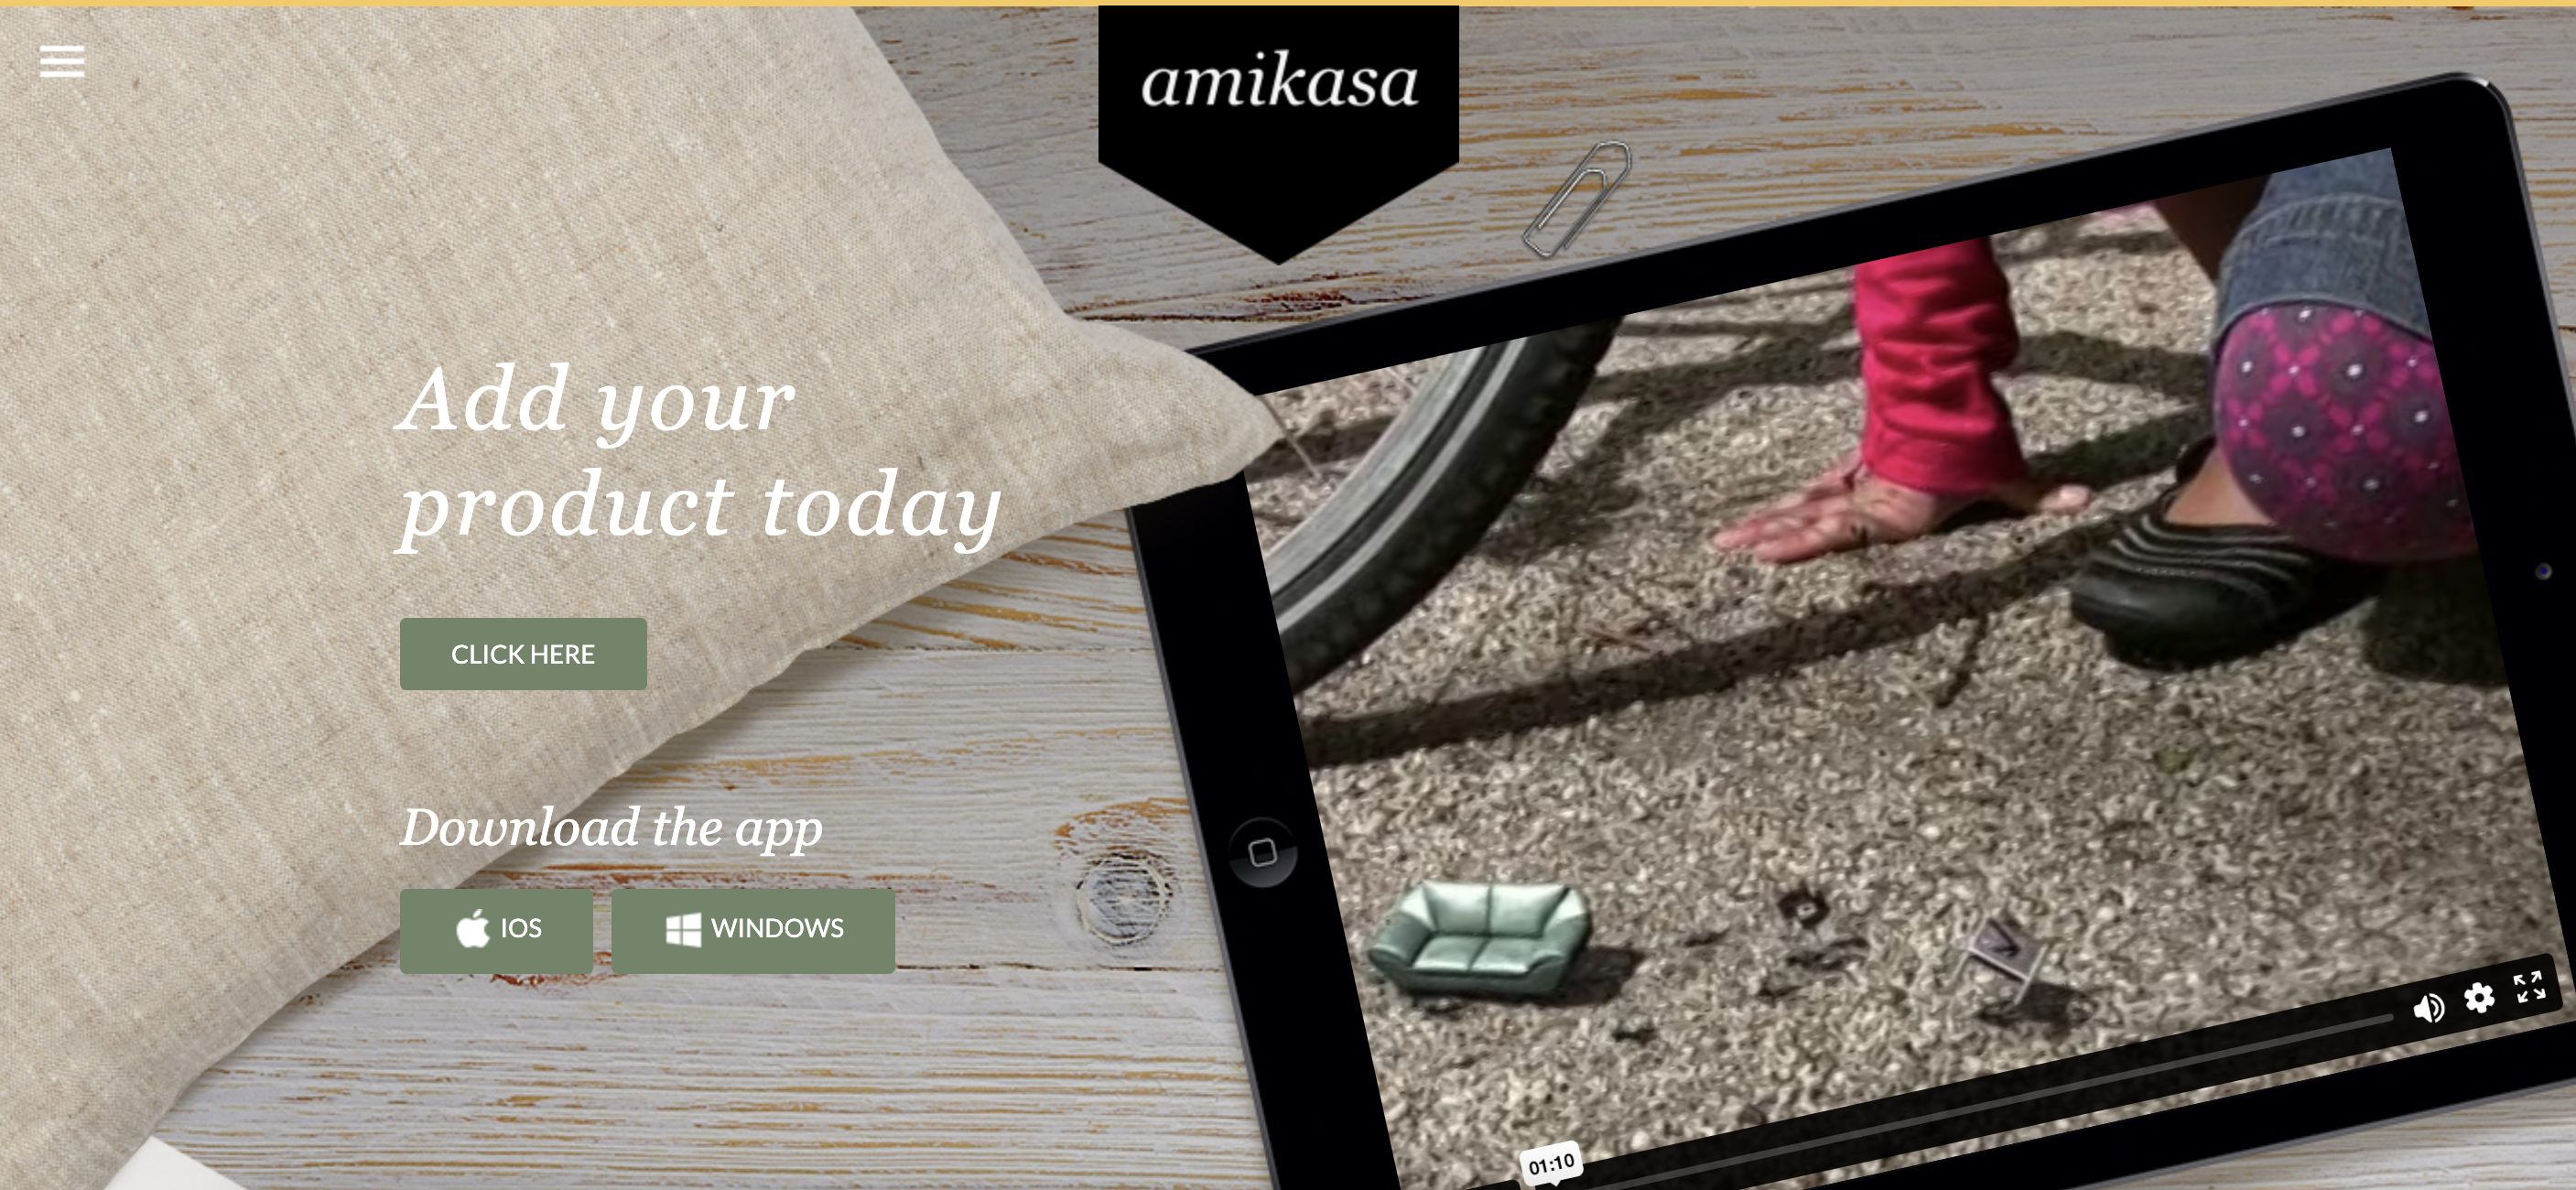 Amikasa webpage